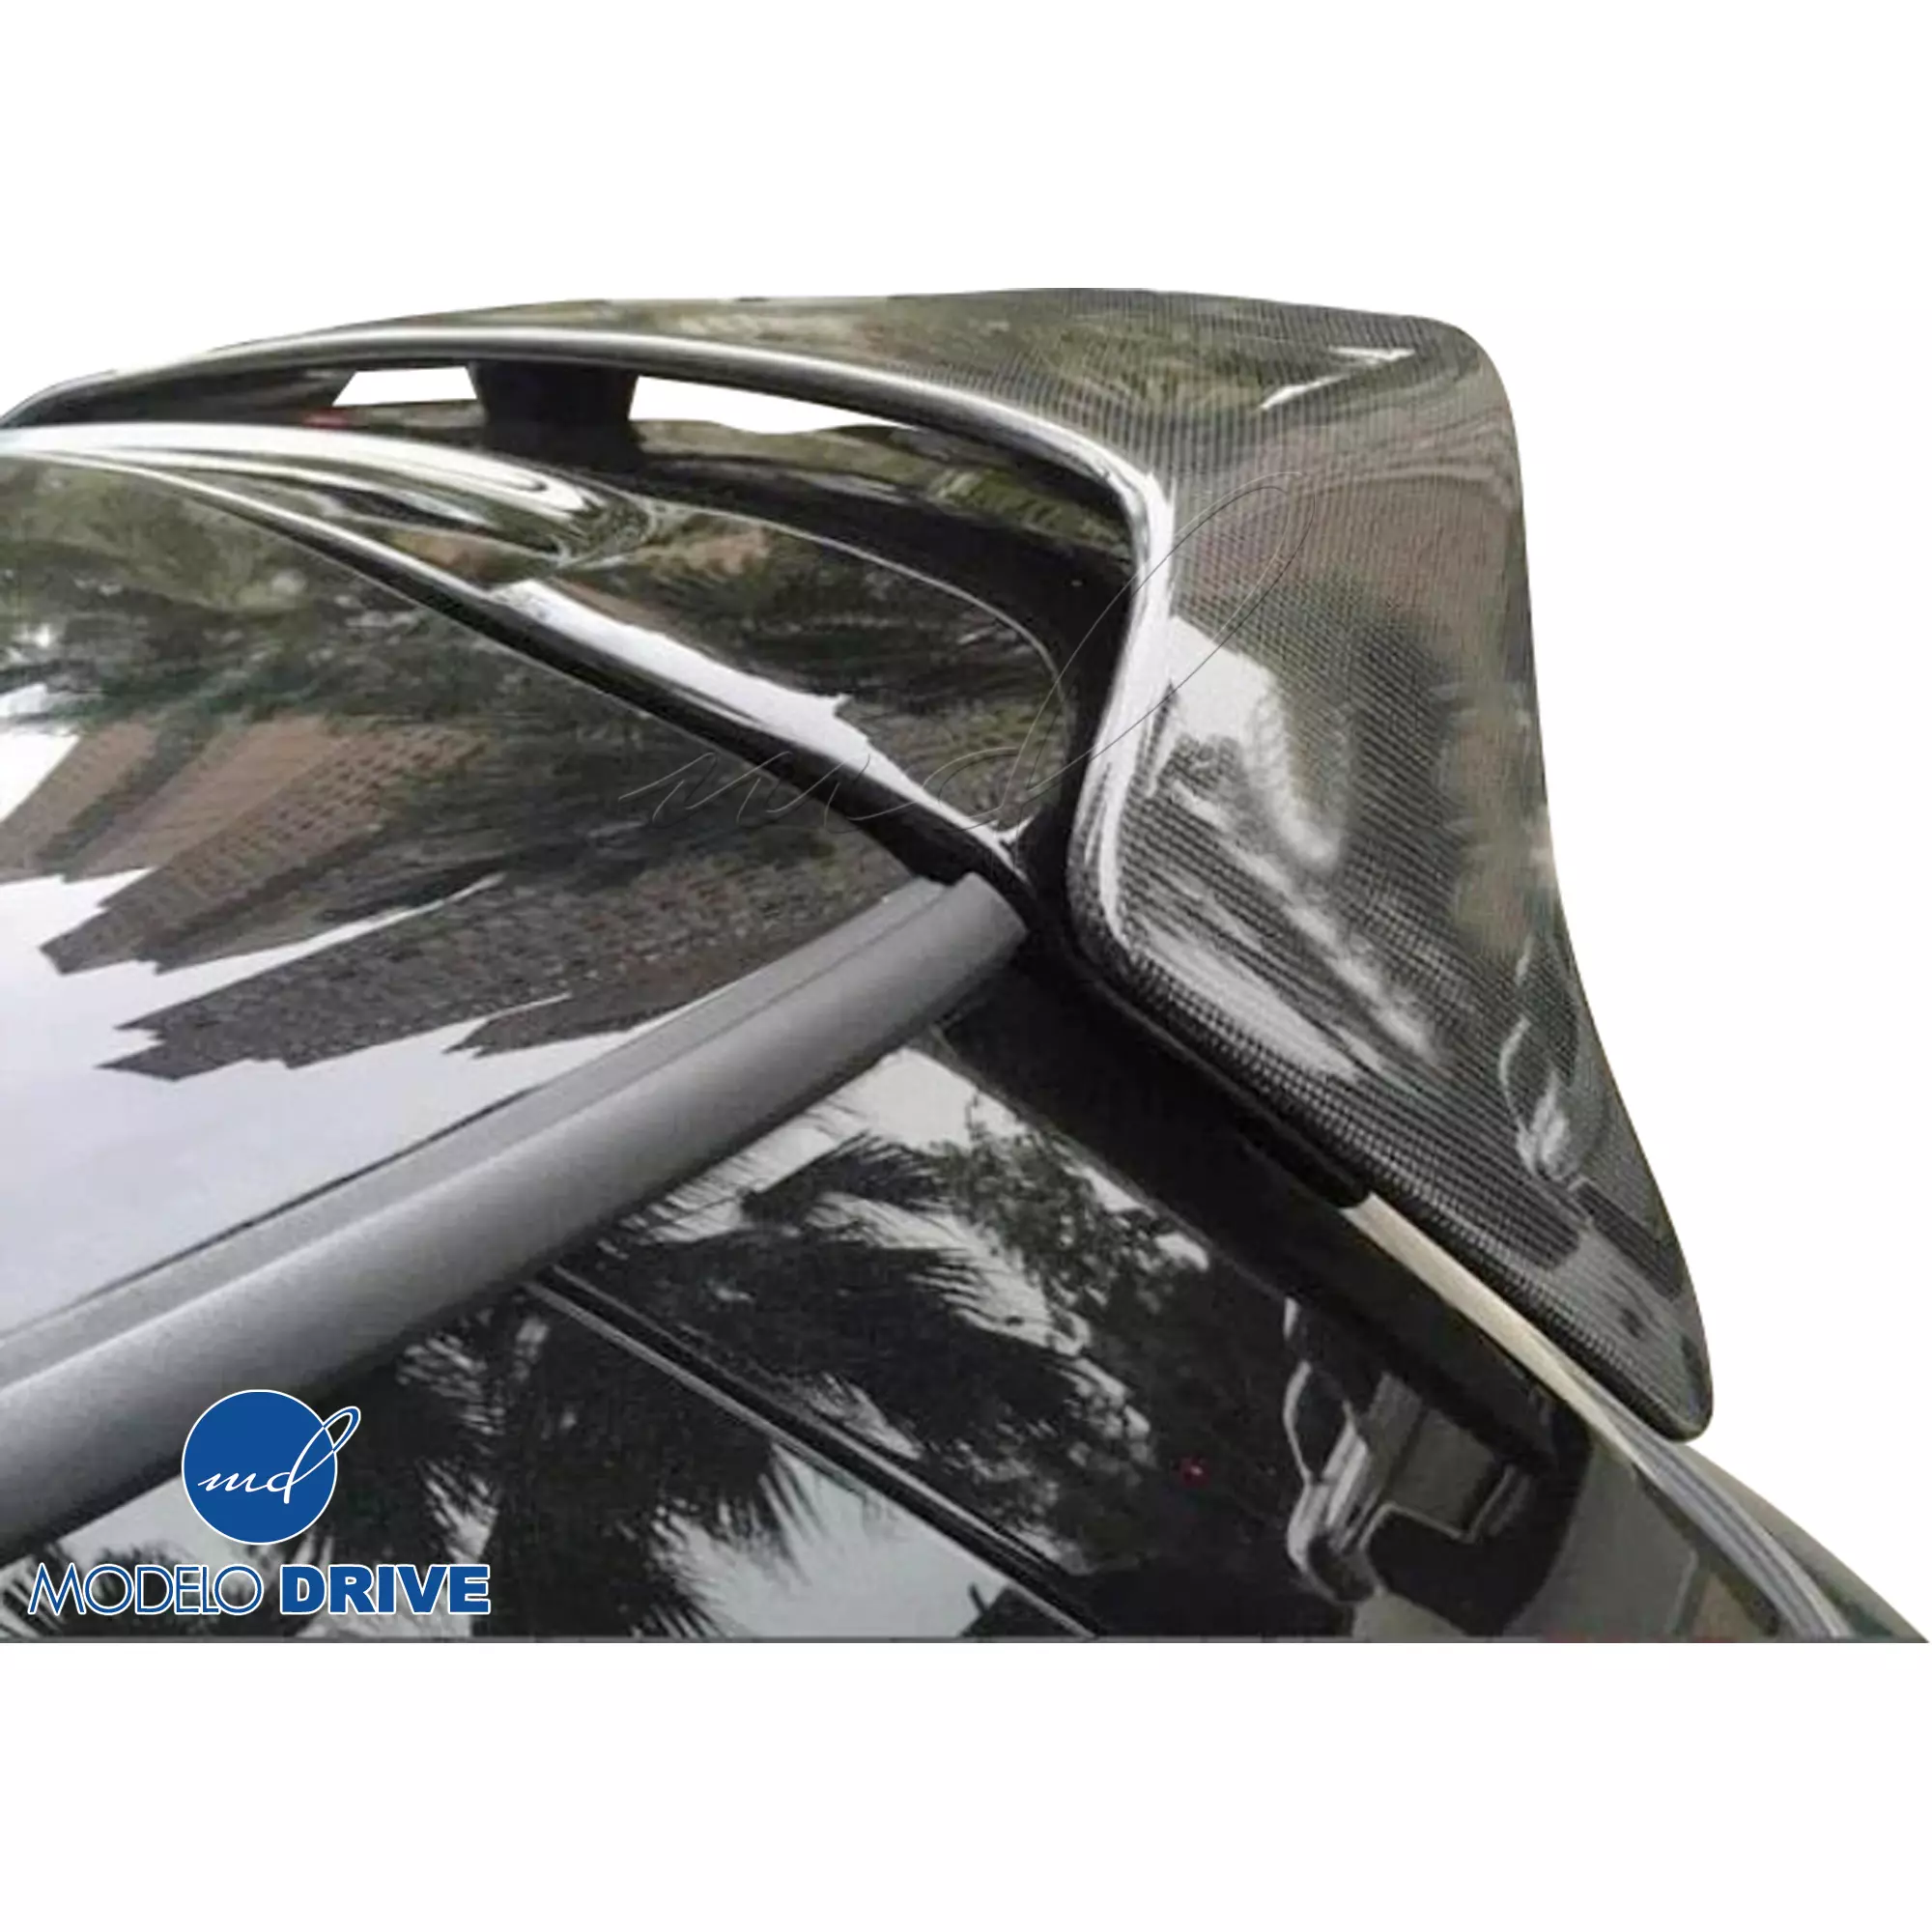 ModeloDrive Carbon Fiber DUAG Roof Spoiler Wing > Mini Mini Cooper F56 F57 2014-2020 - Image 1